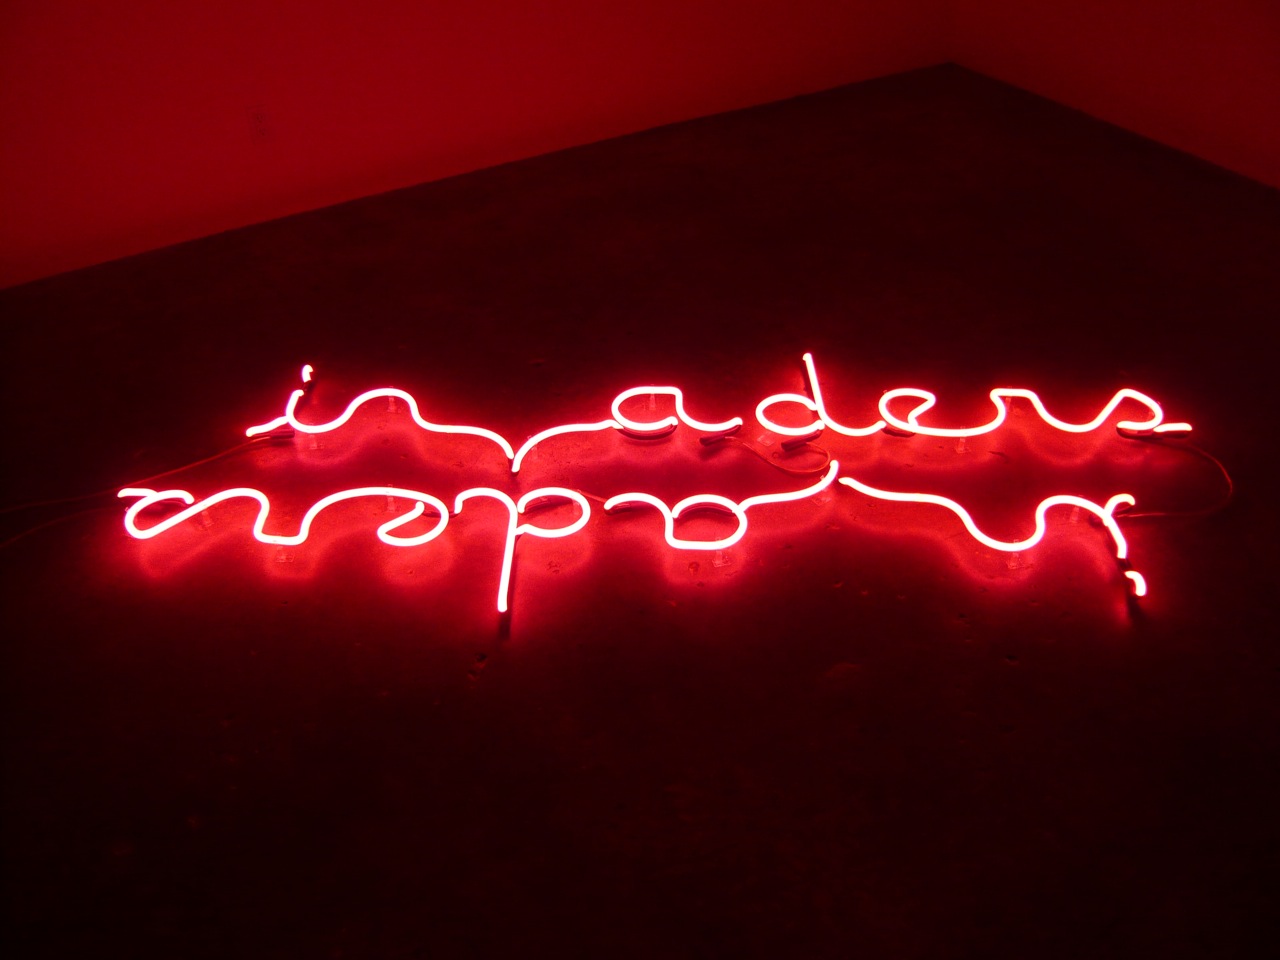  Julio César Morales,  Invaders , 2011, Neon light, 36 x 96 inches (92 x 244 cm) 